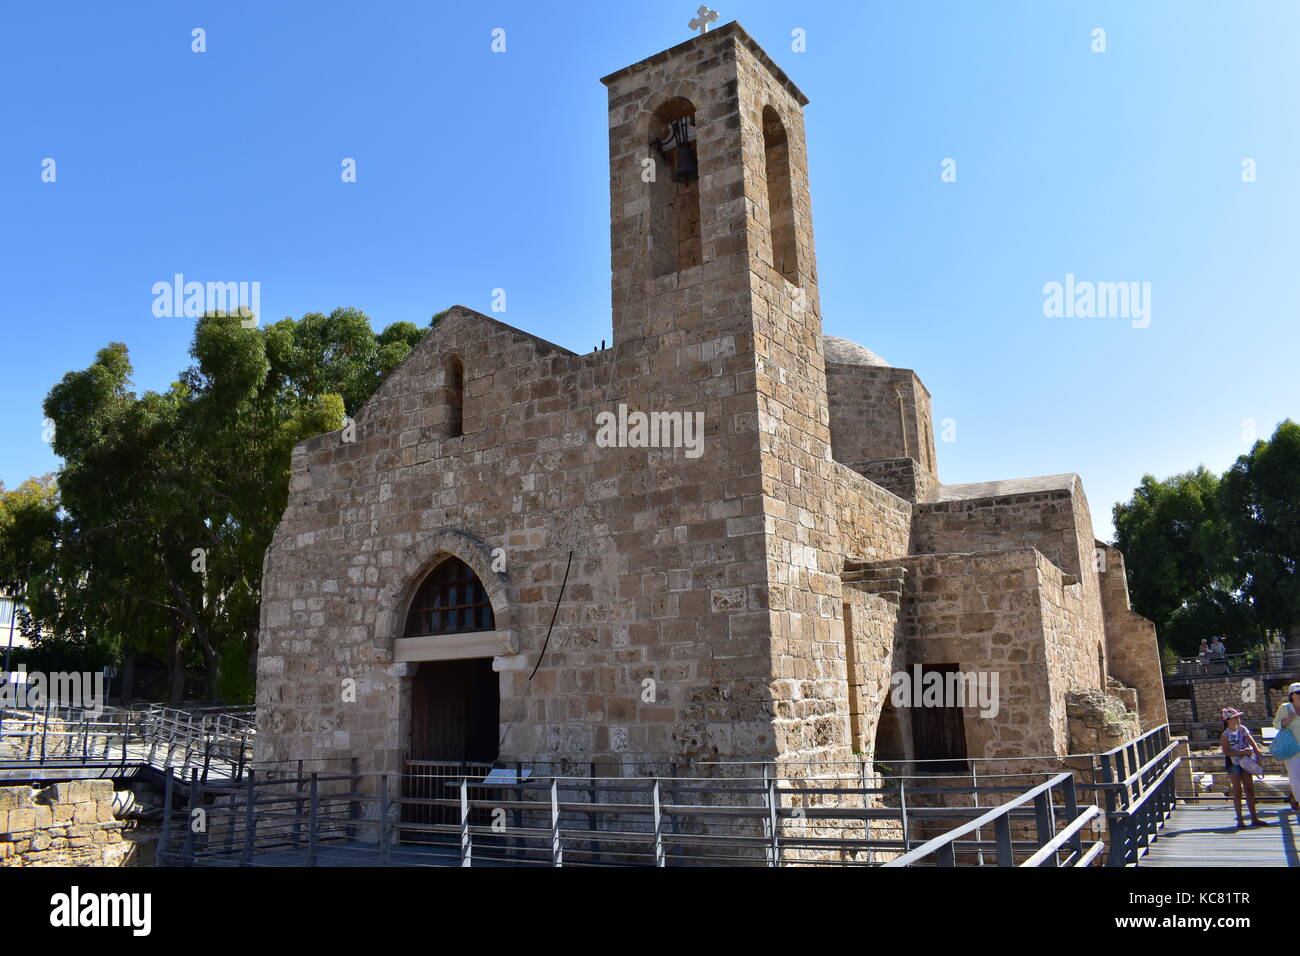 Basilica paleocristiana di panagia chrysopolitissa e Agia Kiriaki chiesa in Kato Pafos, Cipro. Foto Stock